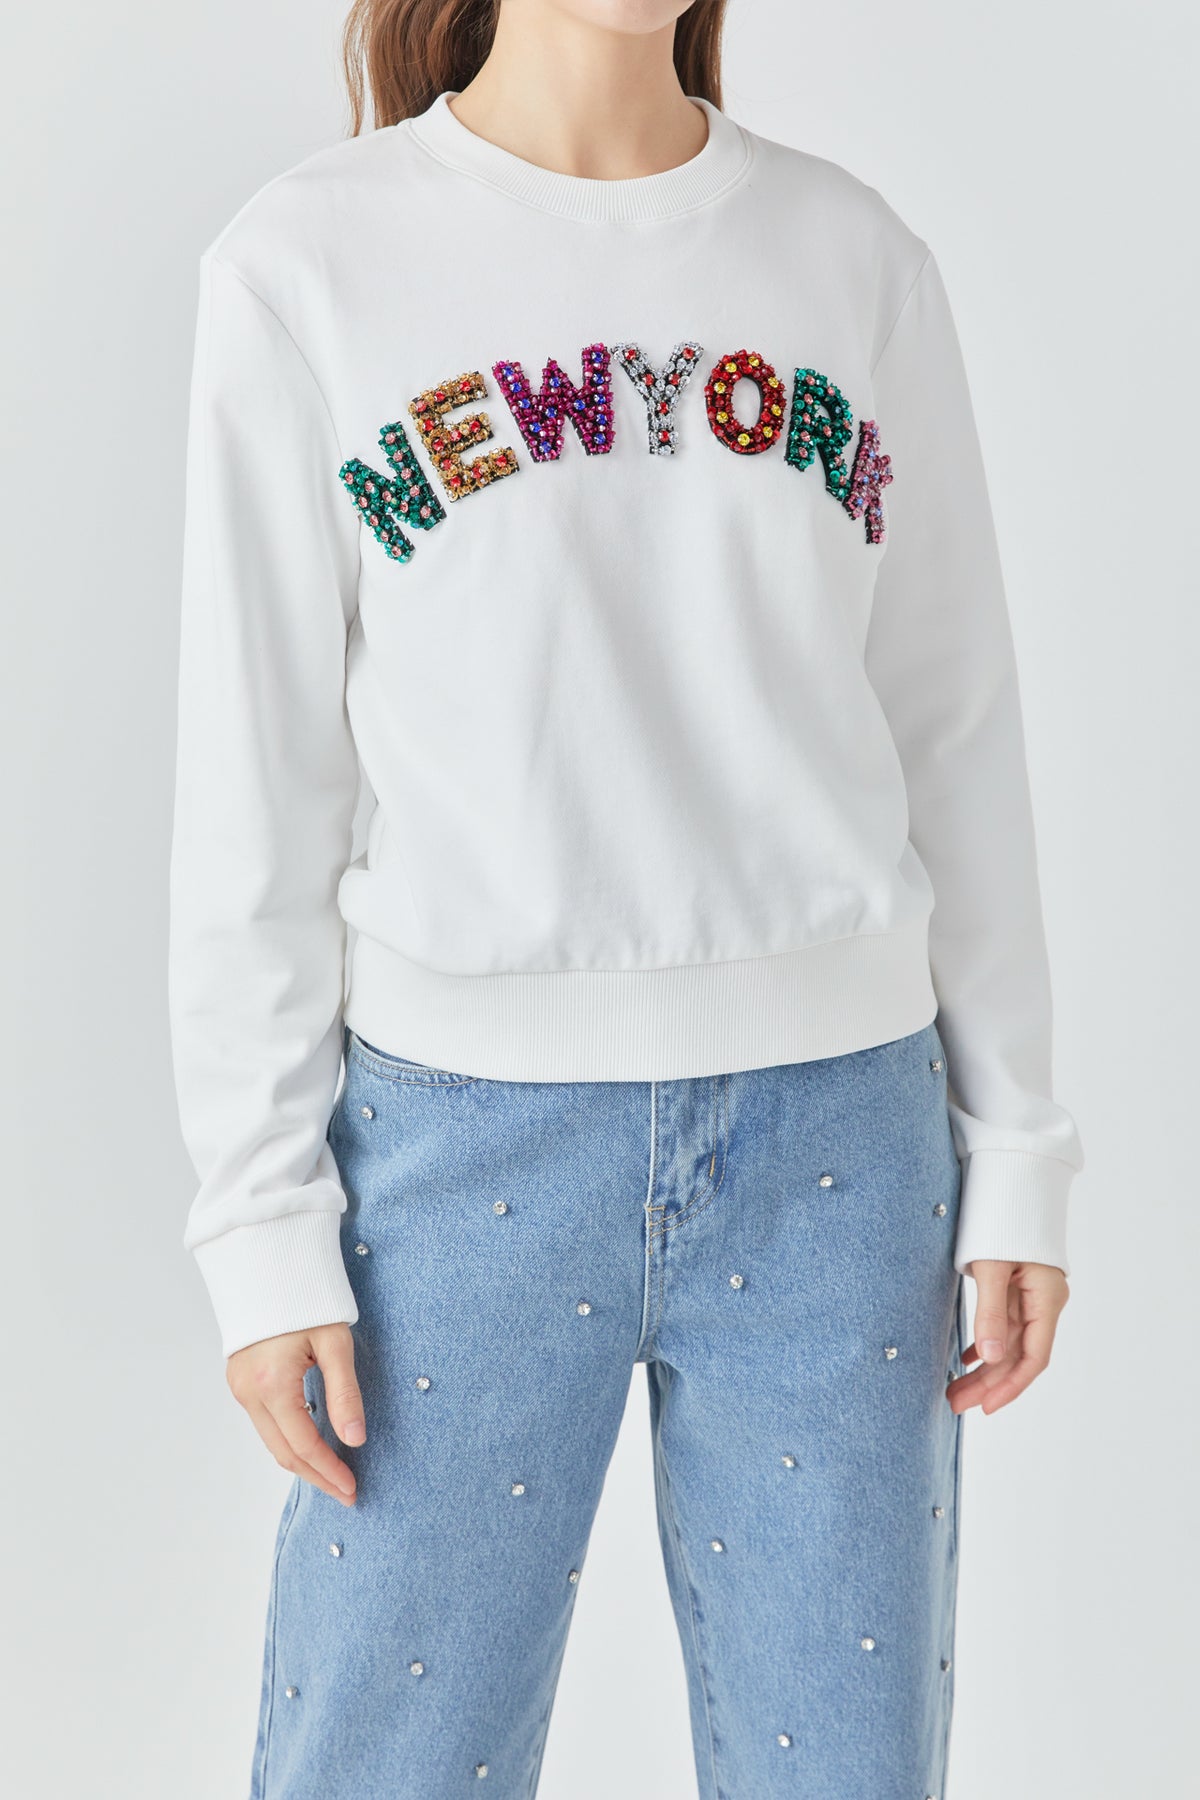 ENDLESS ROSE - New York Embellished Sweatshirt - HOODIES &SWEATSHIRTS available at Objectrare